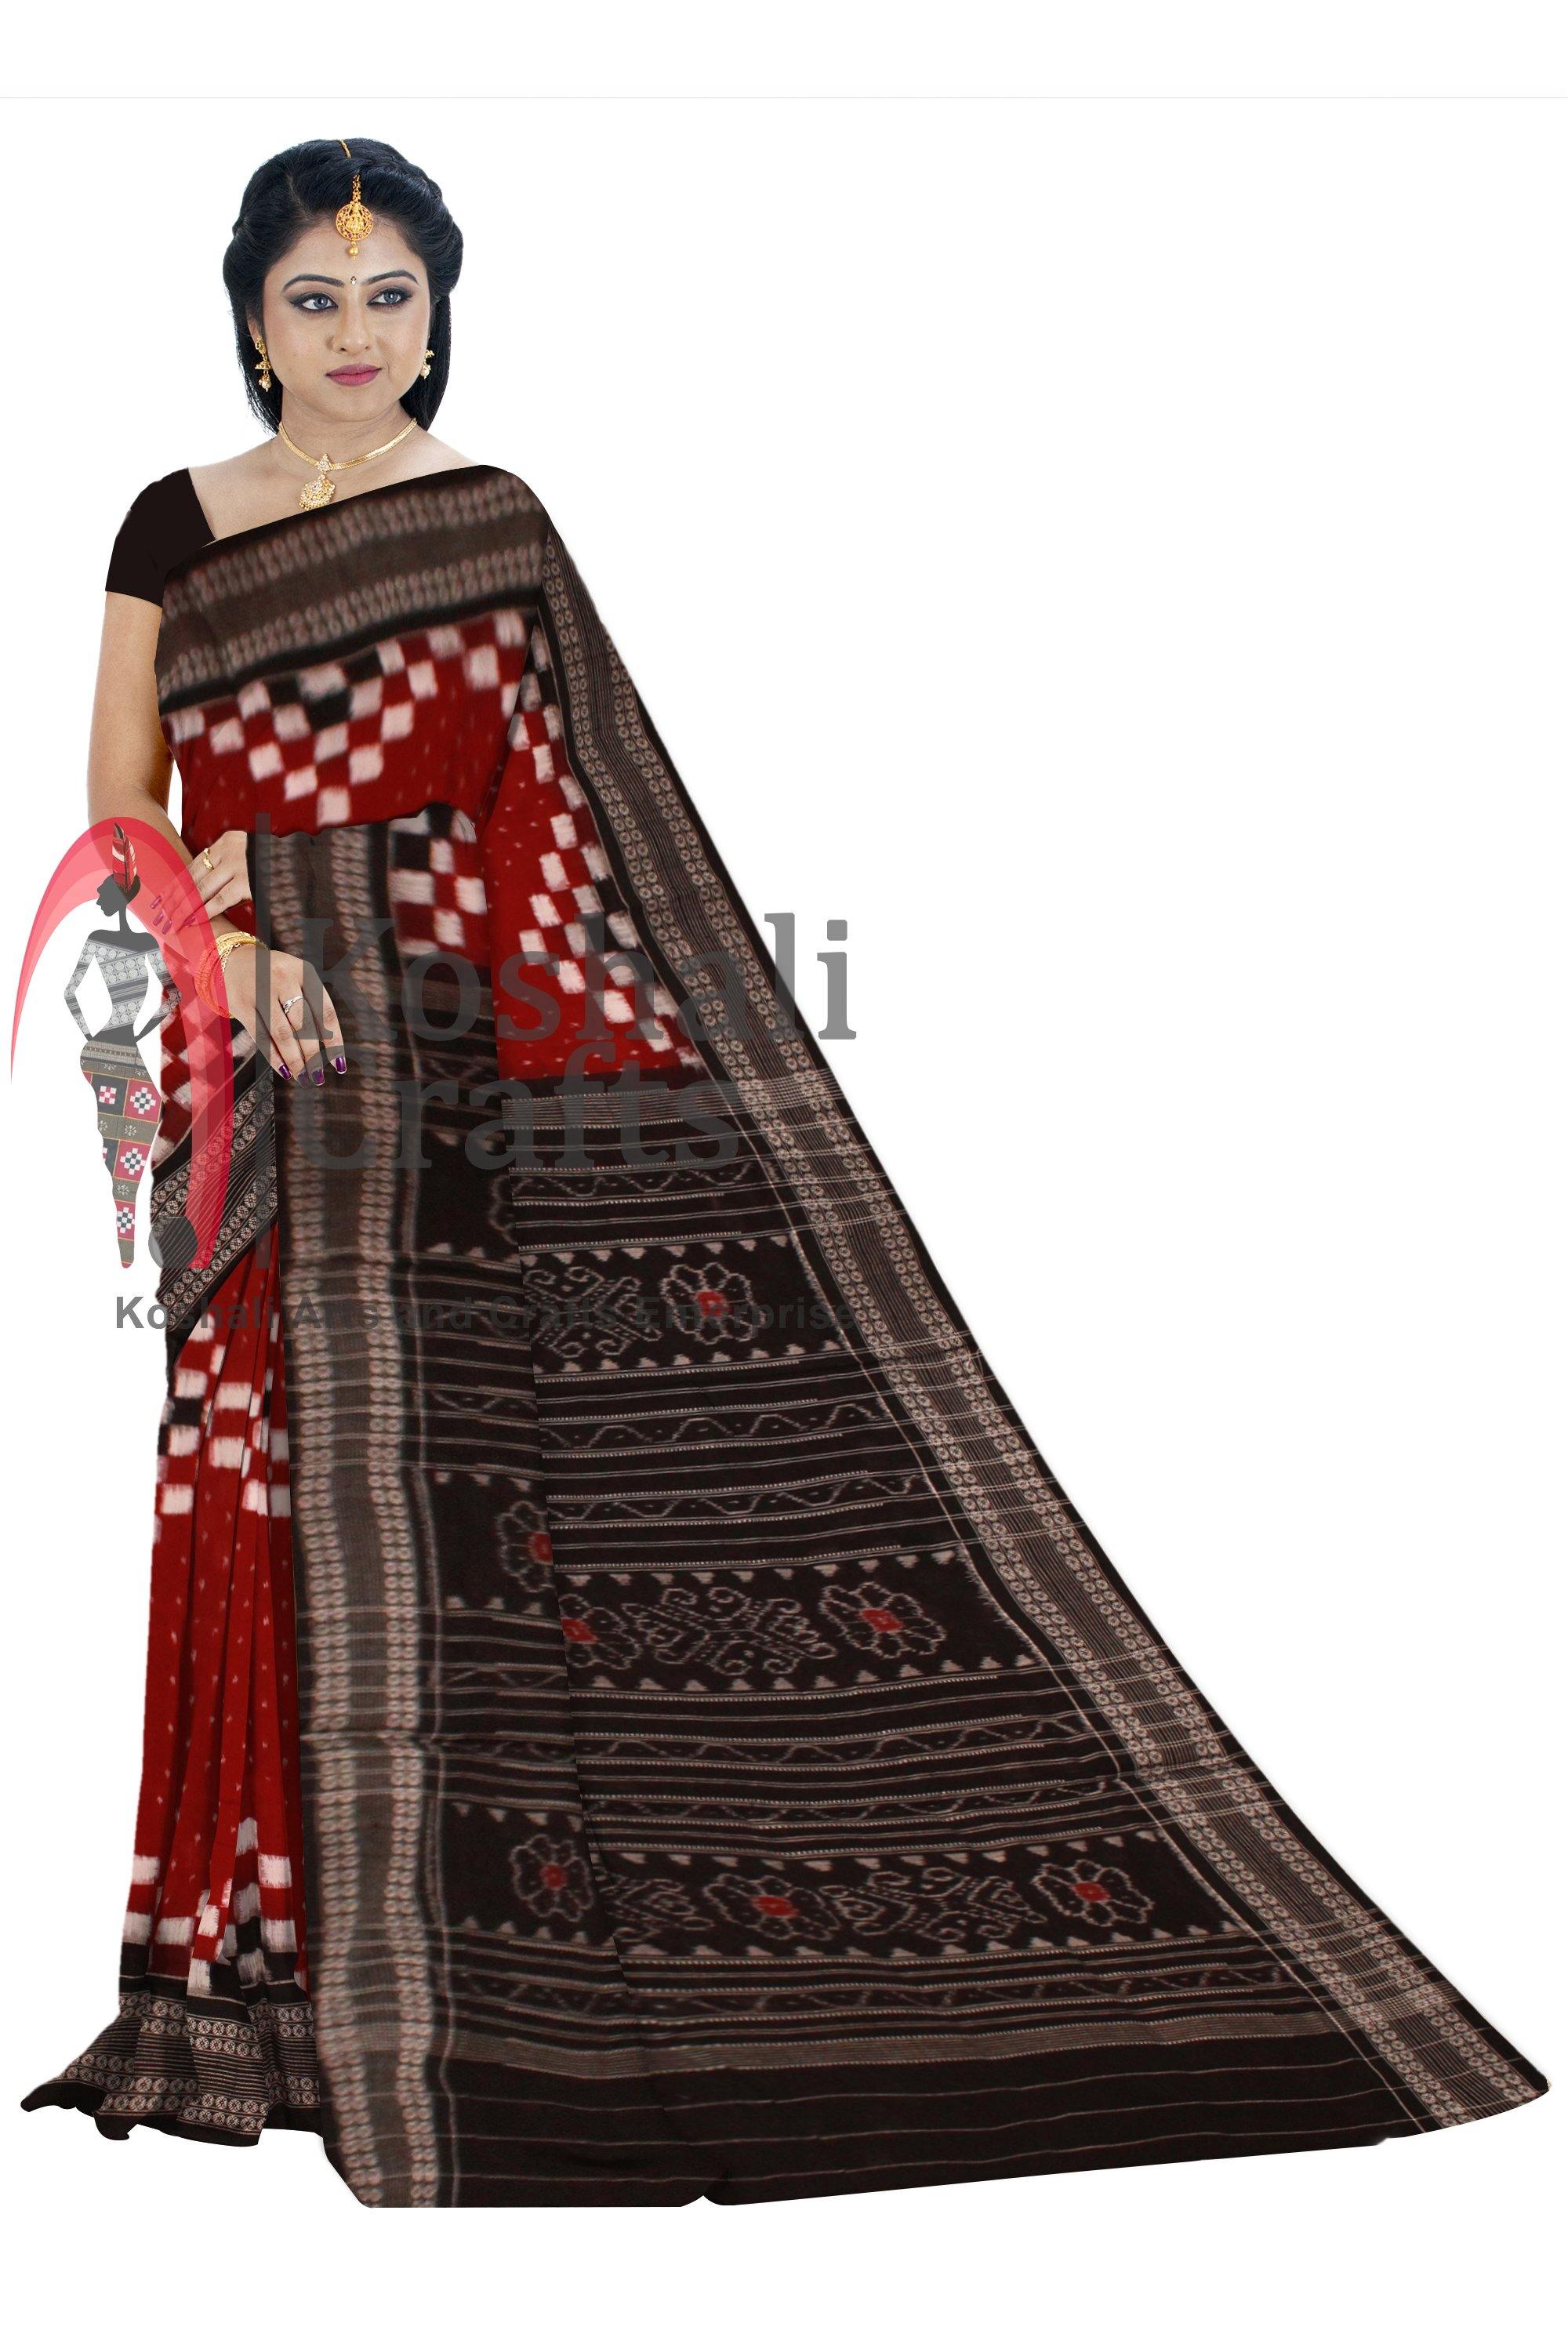 Pasapali Design Sambalpuri cotton saree in  Maroon - Koshali Arts & Crafts Enterprise